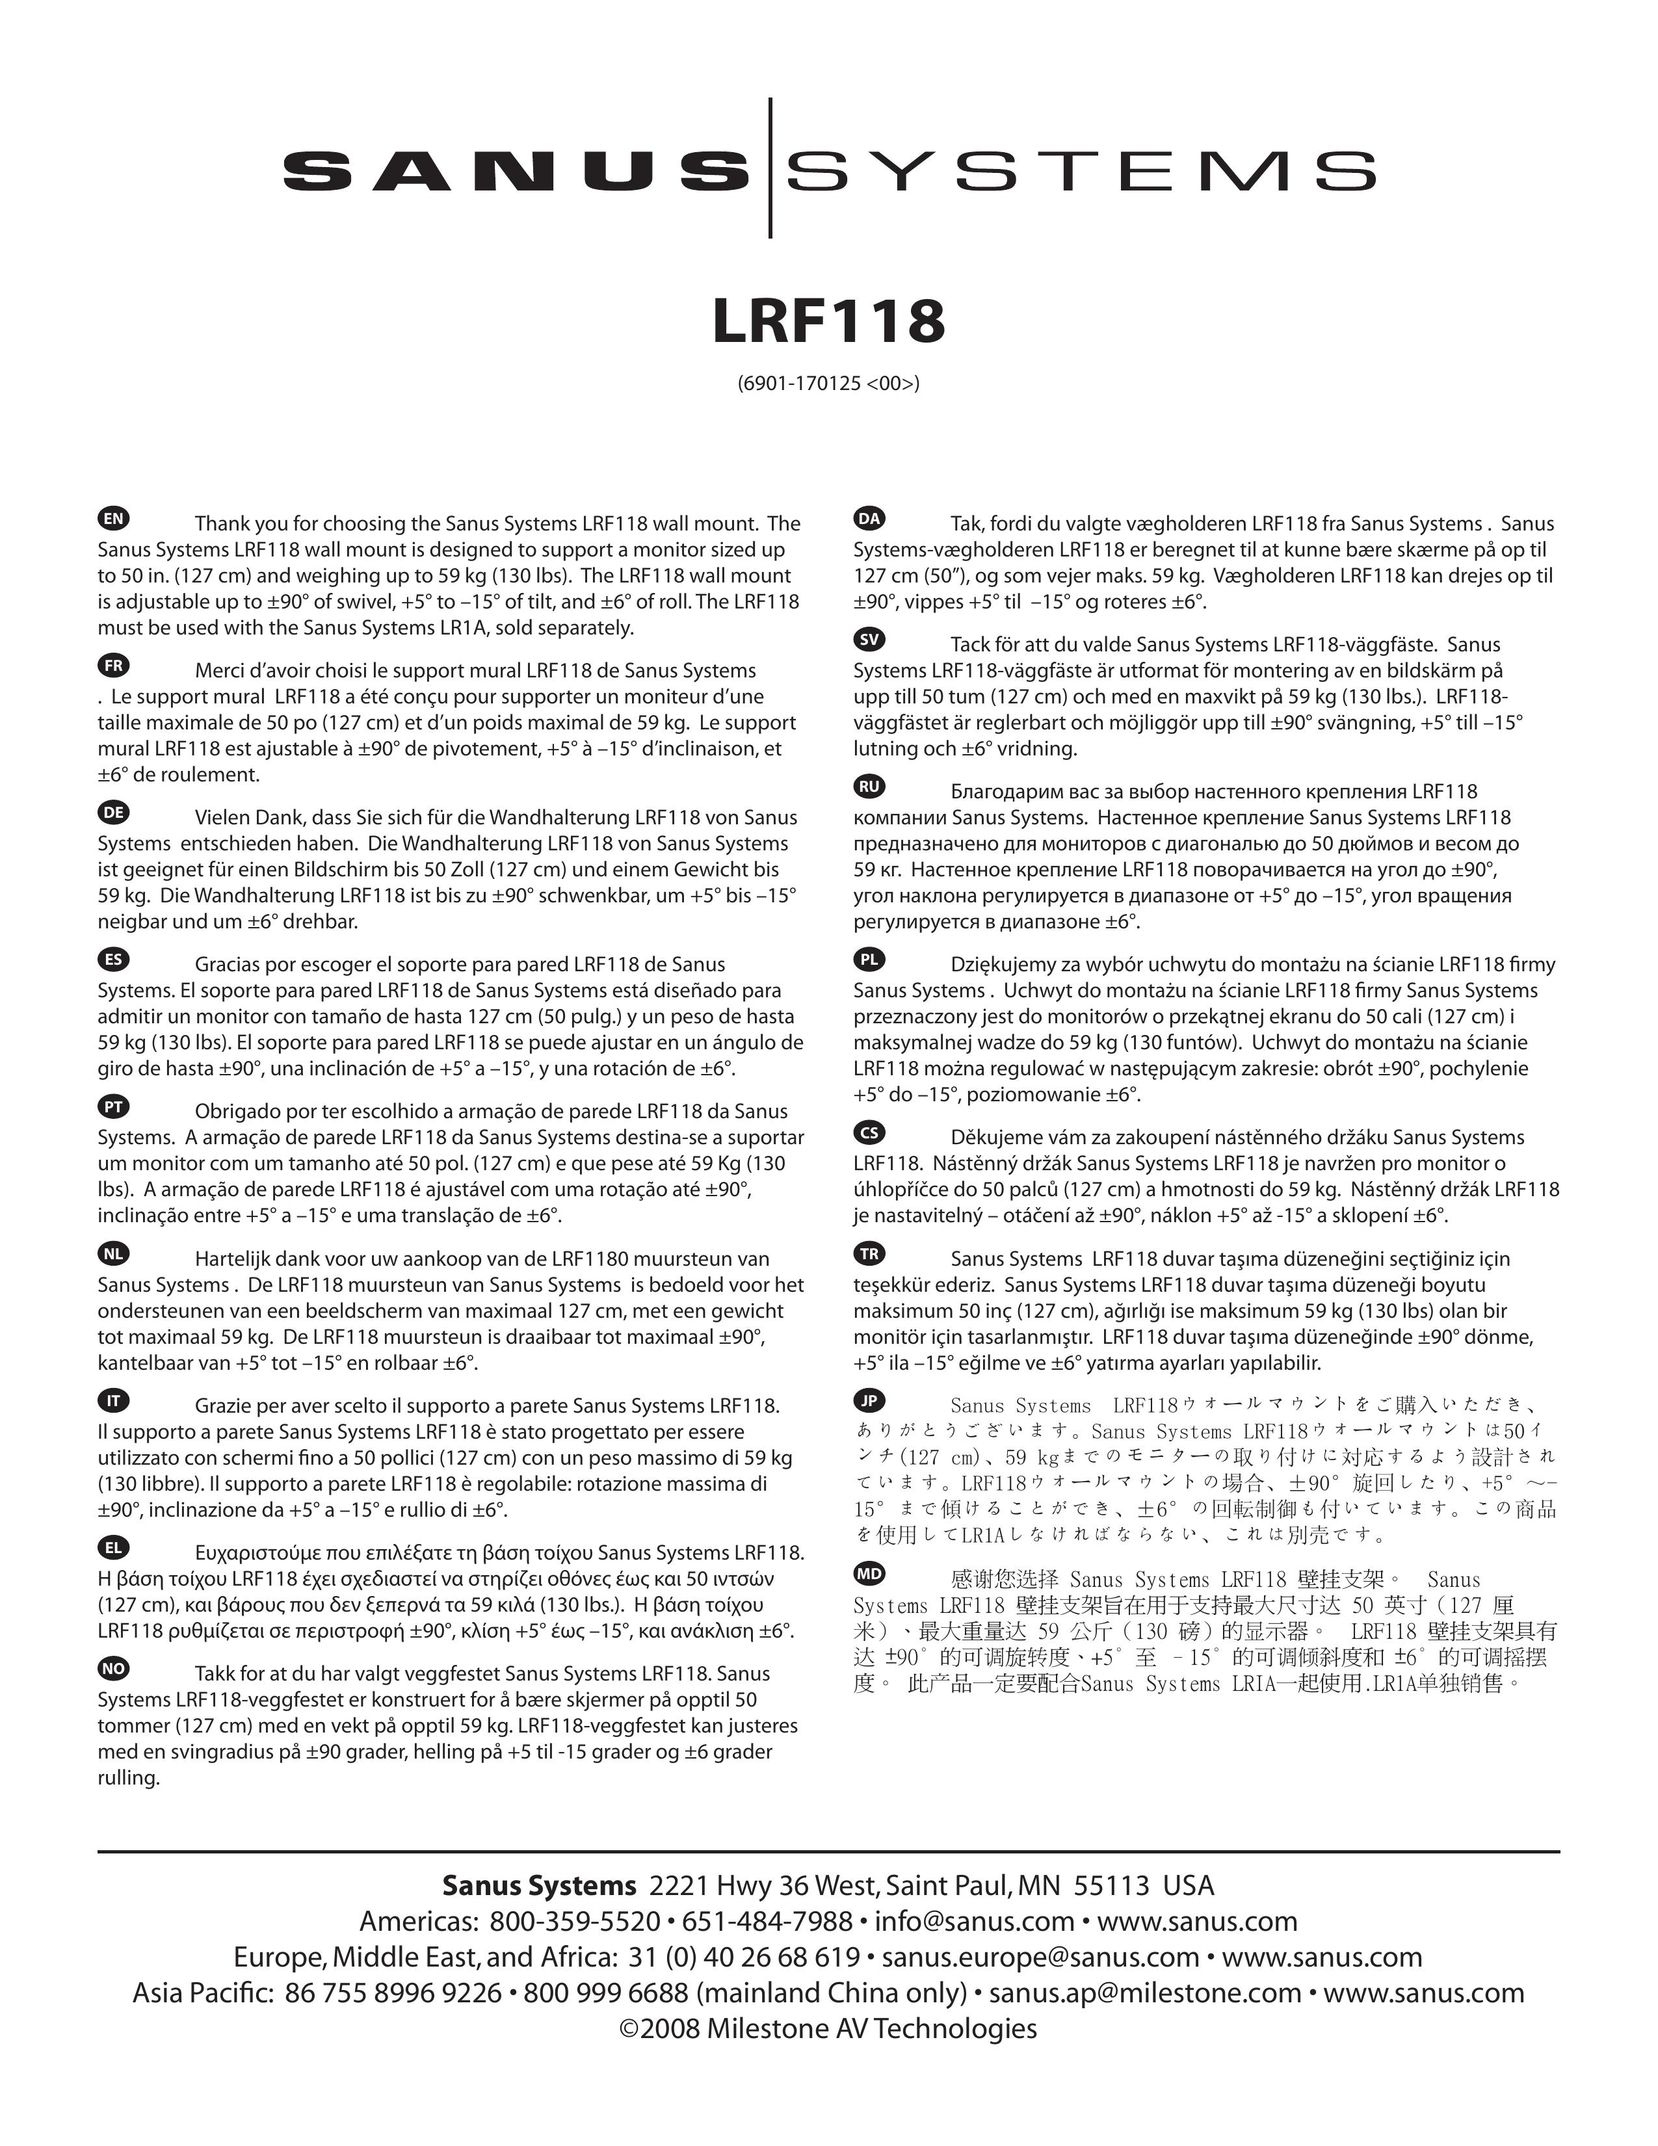 Sanus Systems LRF118-B1 Indoor Furnishings User Manual